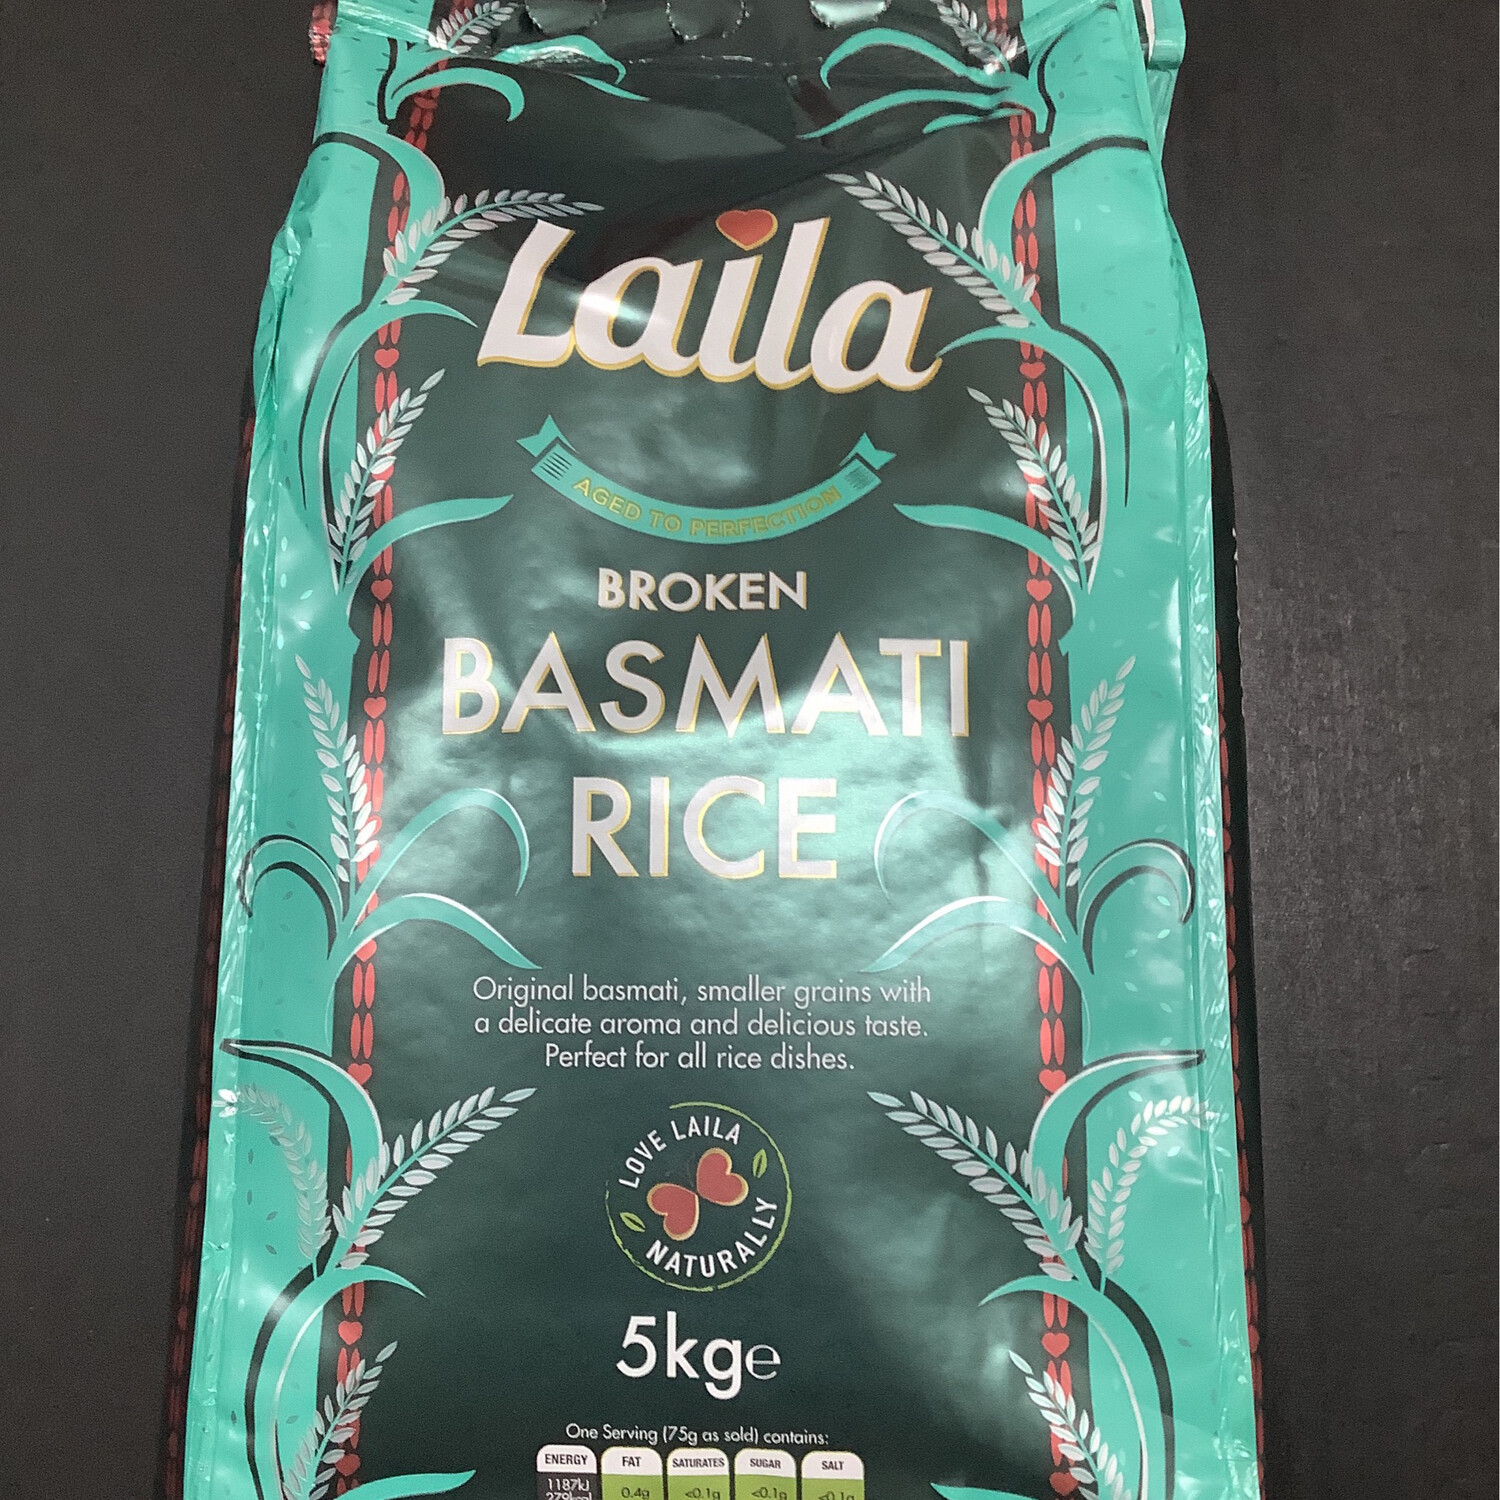 Laila Broken Basmati Rice 5kg